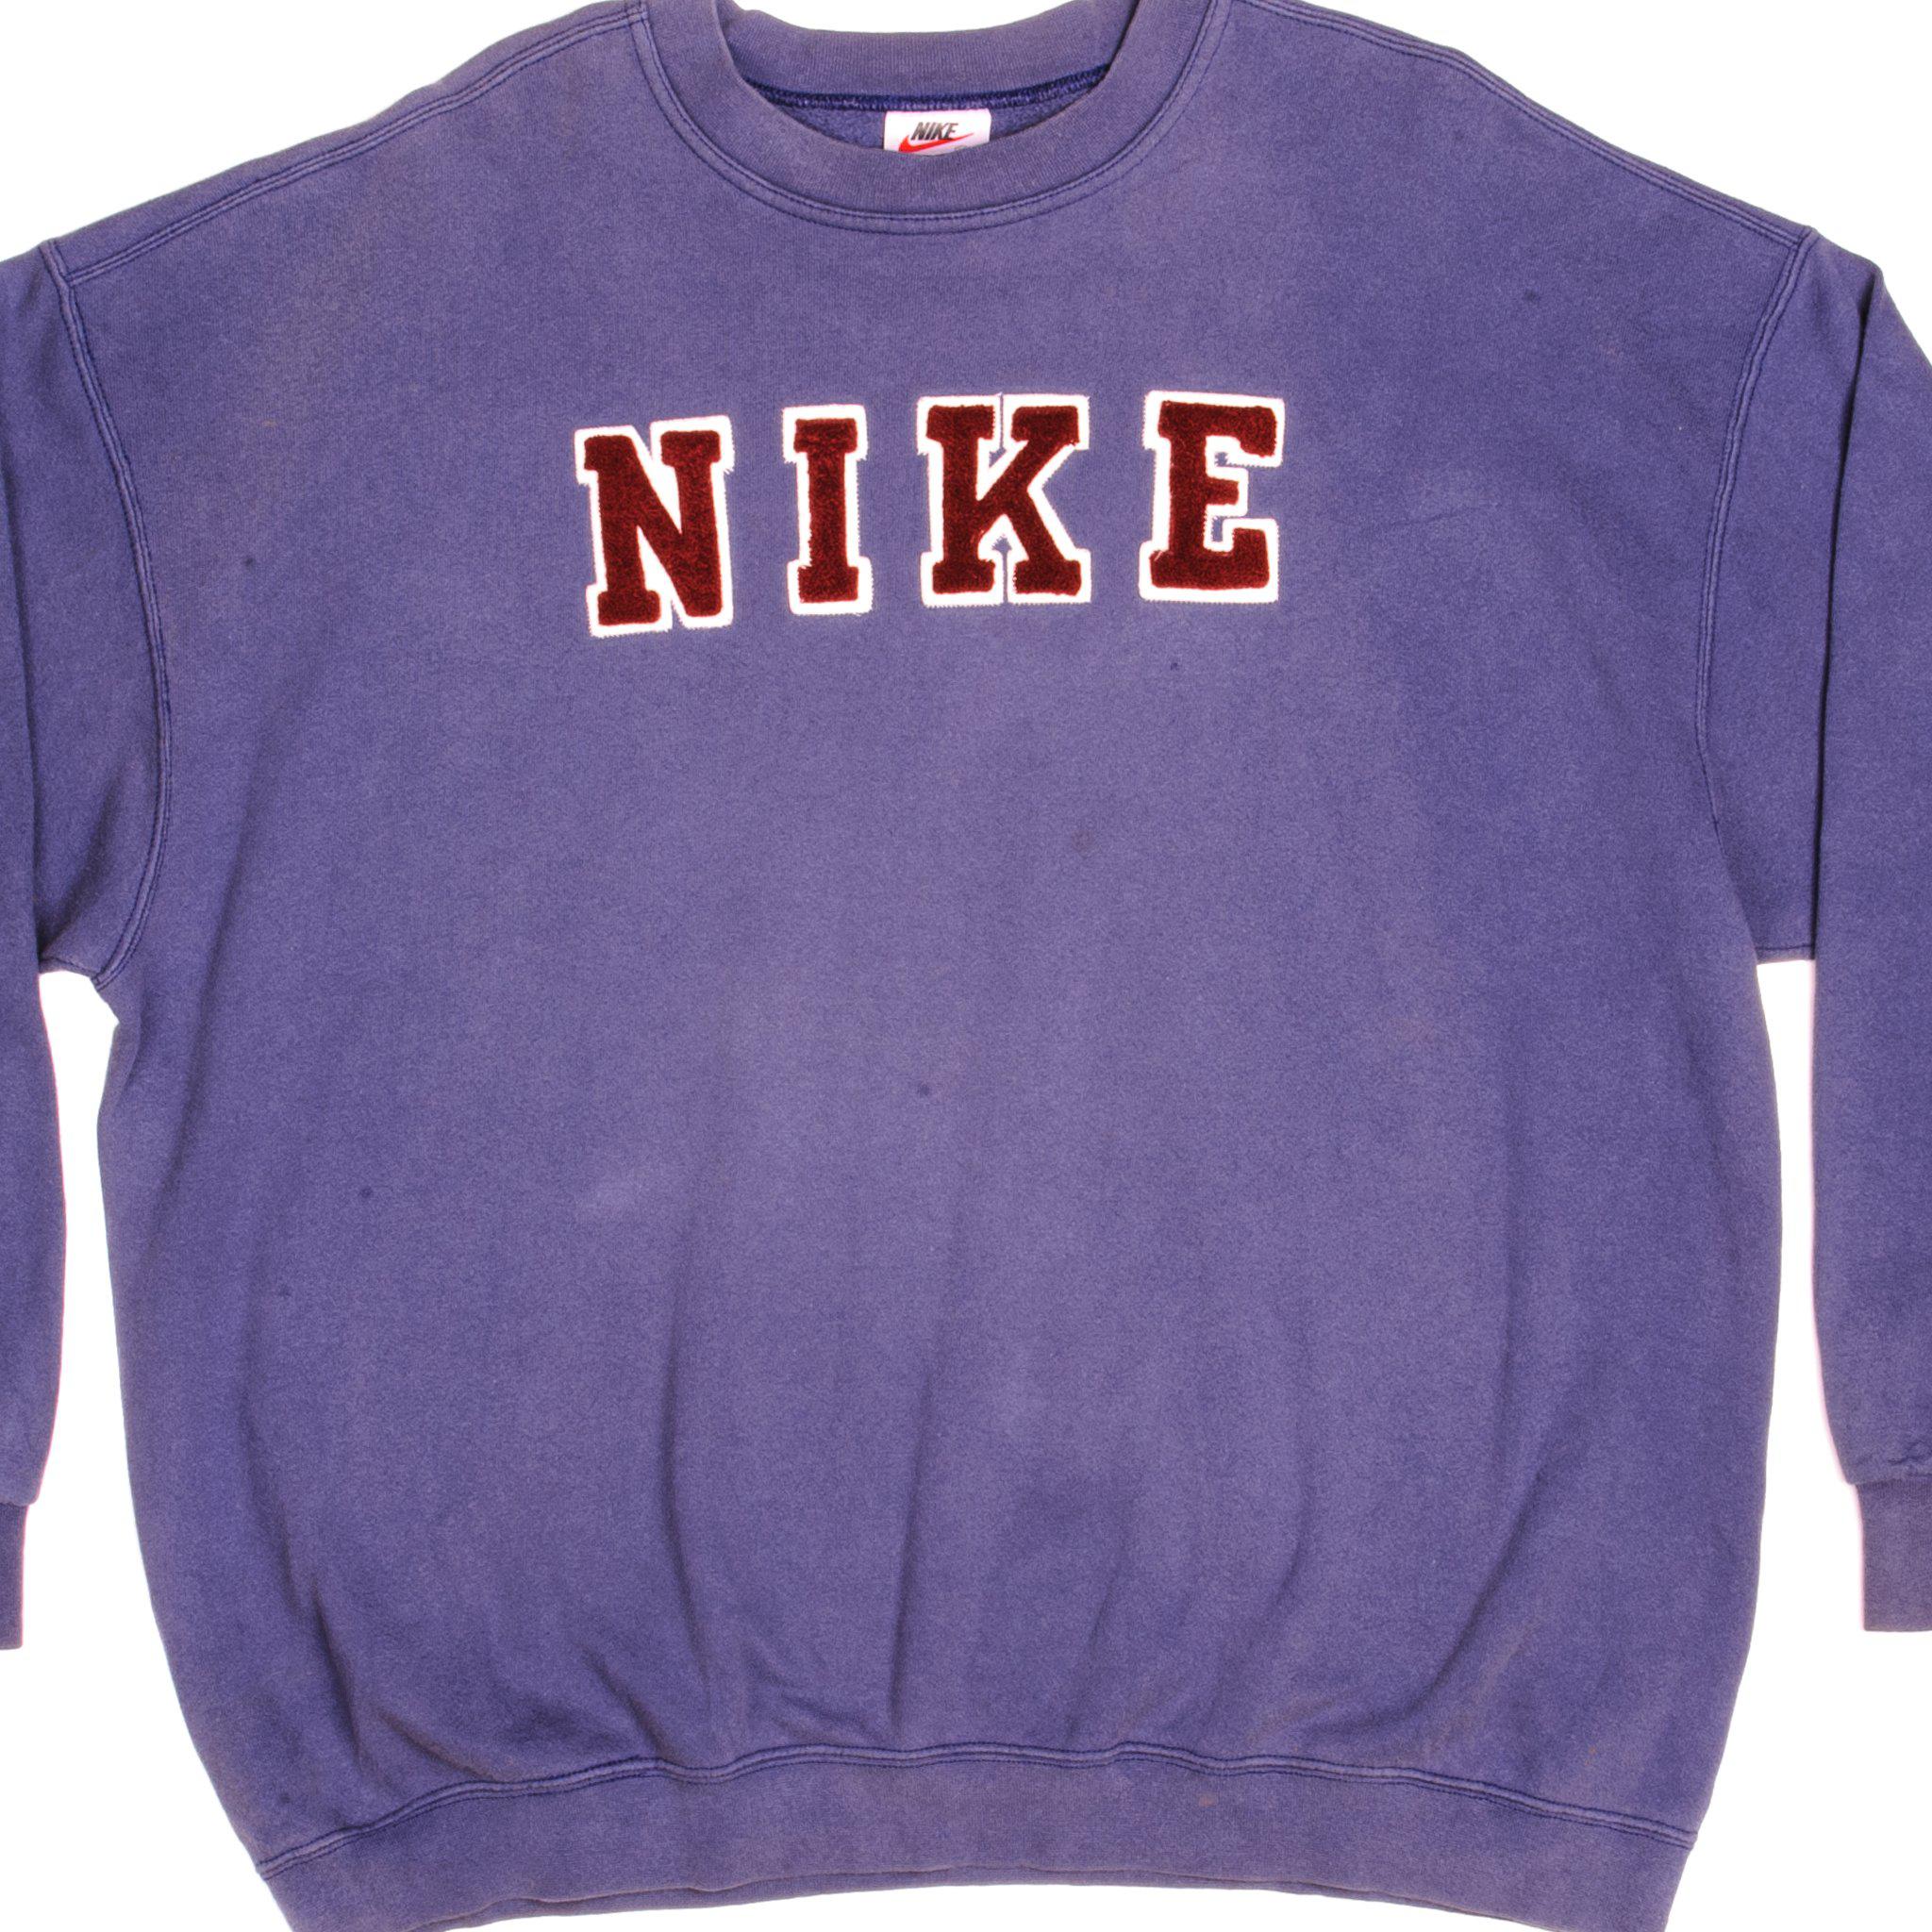 90s NIKE Sweatshirt Made in USA VTG柄デザイン無地ワンポイント